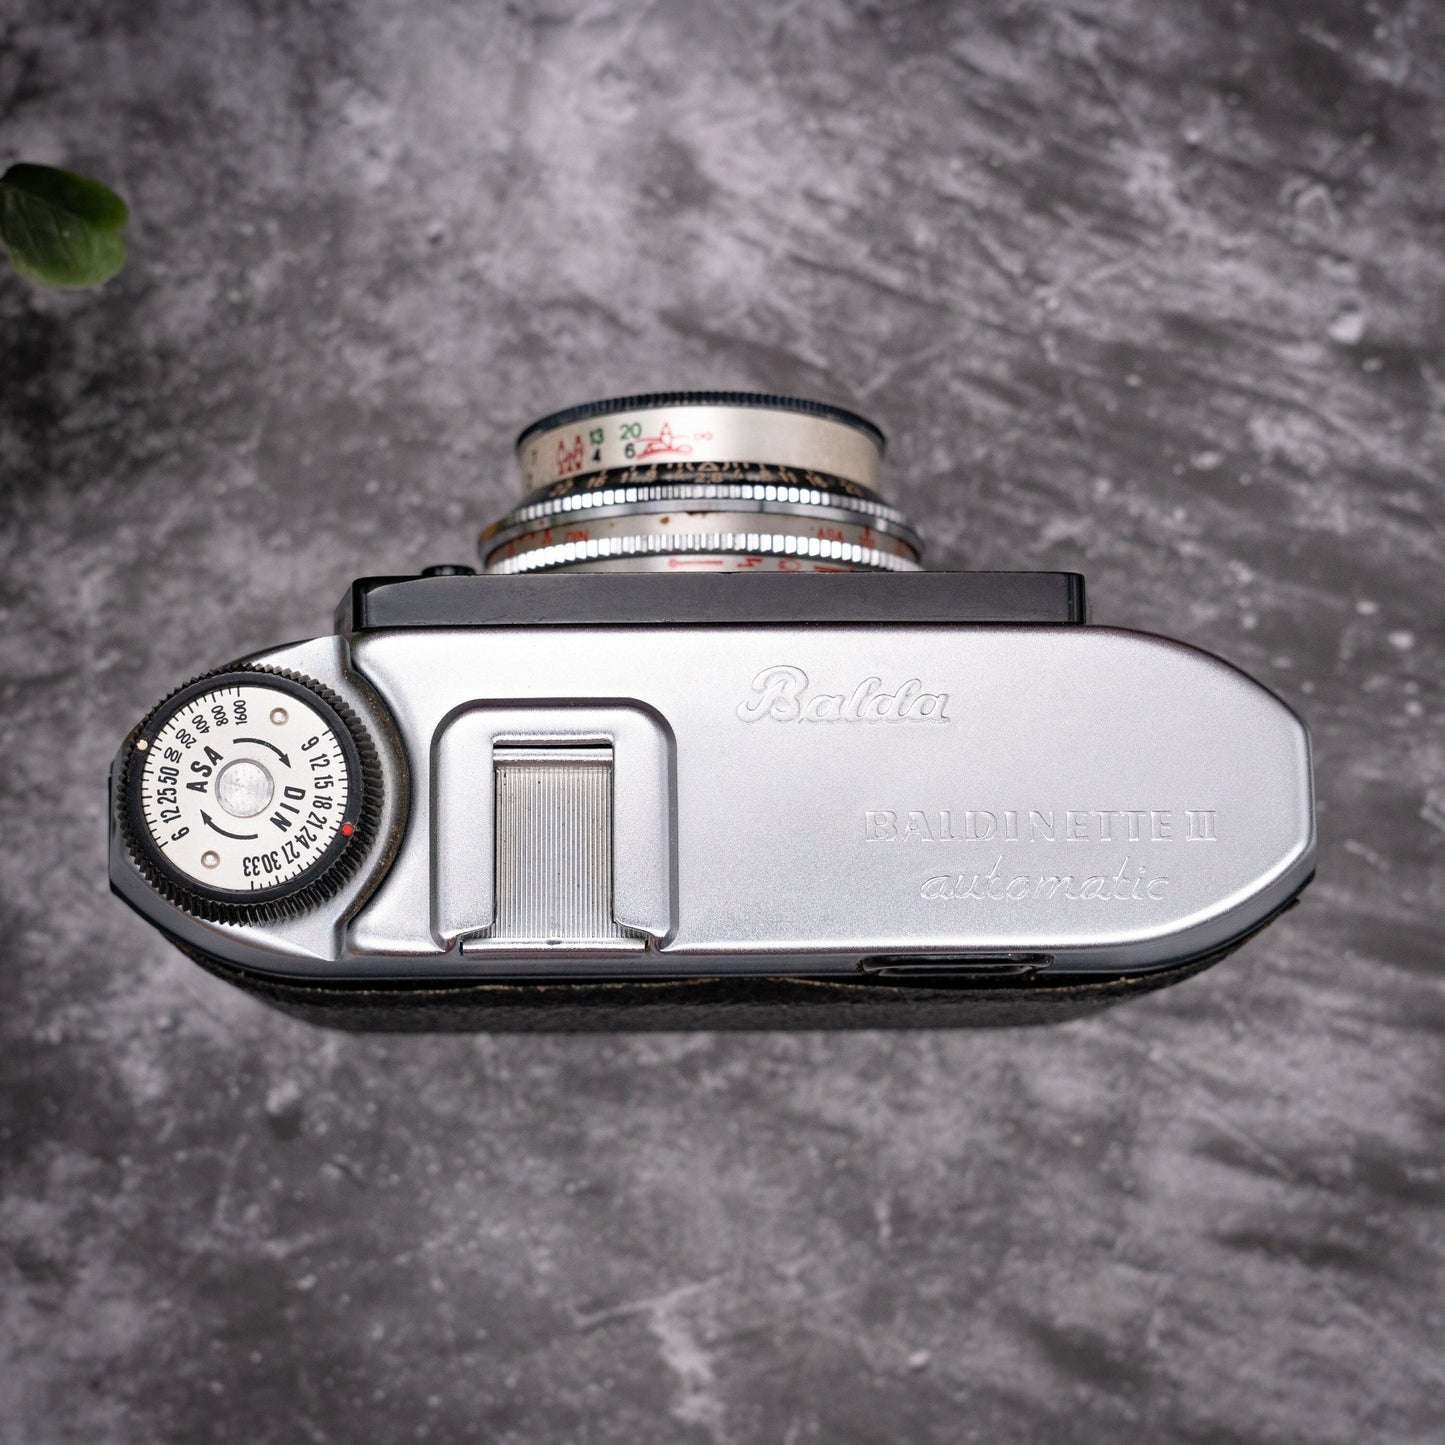 35mm Film Camera Kit | Balda Baldinette ii + Roll Of Expired Film - Expired Film Club